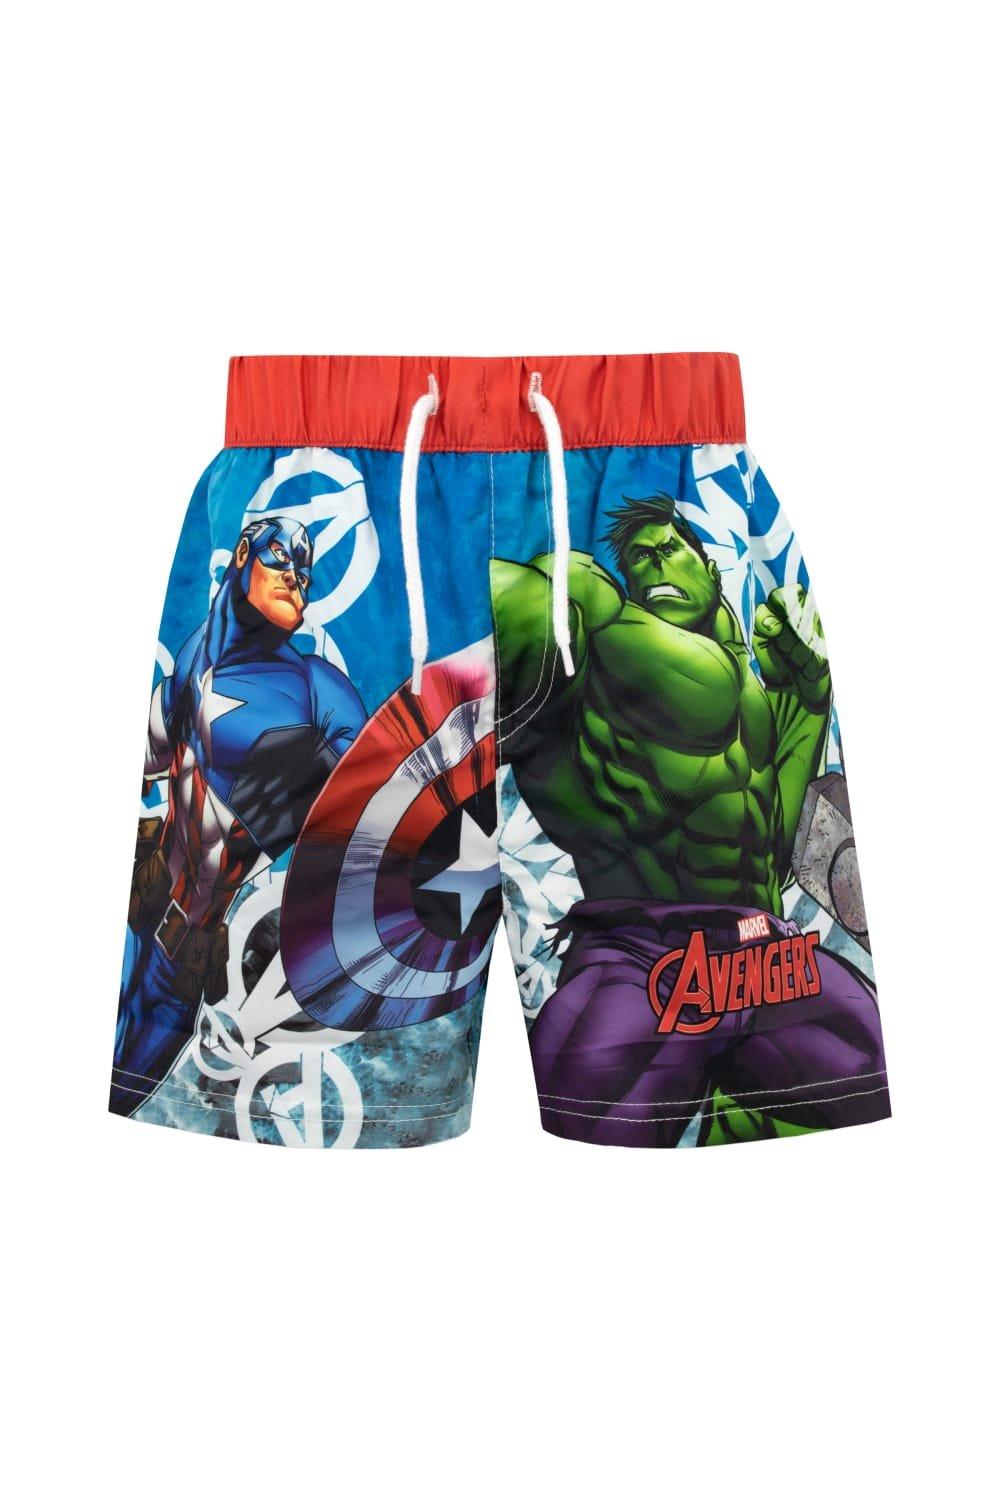 Captain America And The Incredible Hulk Avengers Swim Shorts